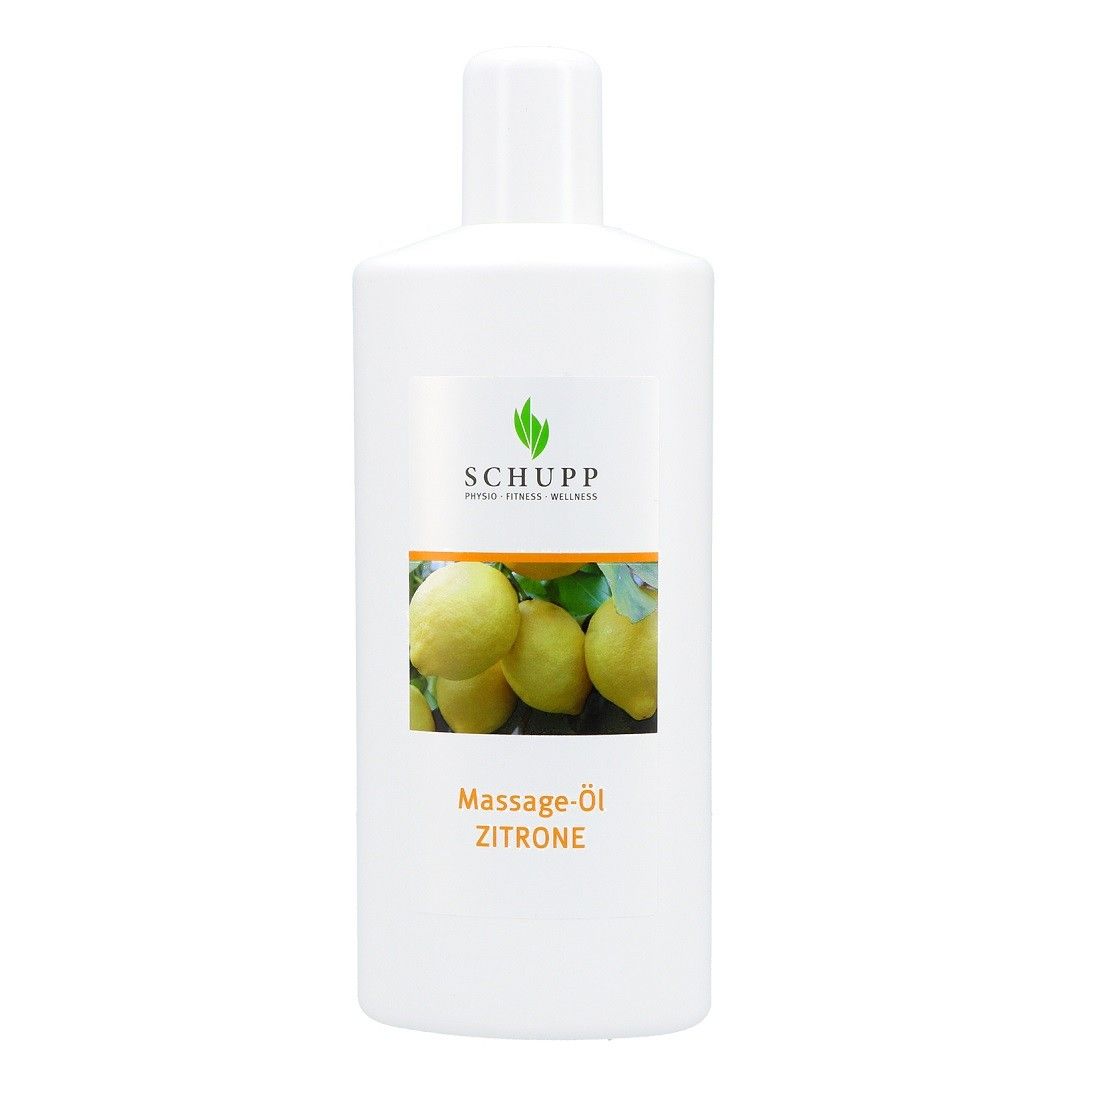 Schupp Massage-Öl Zitrone